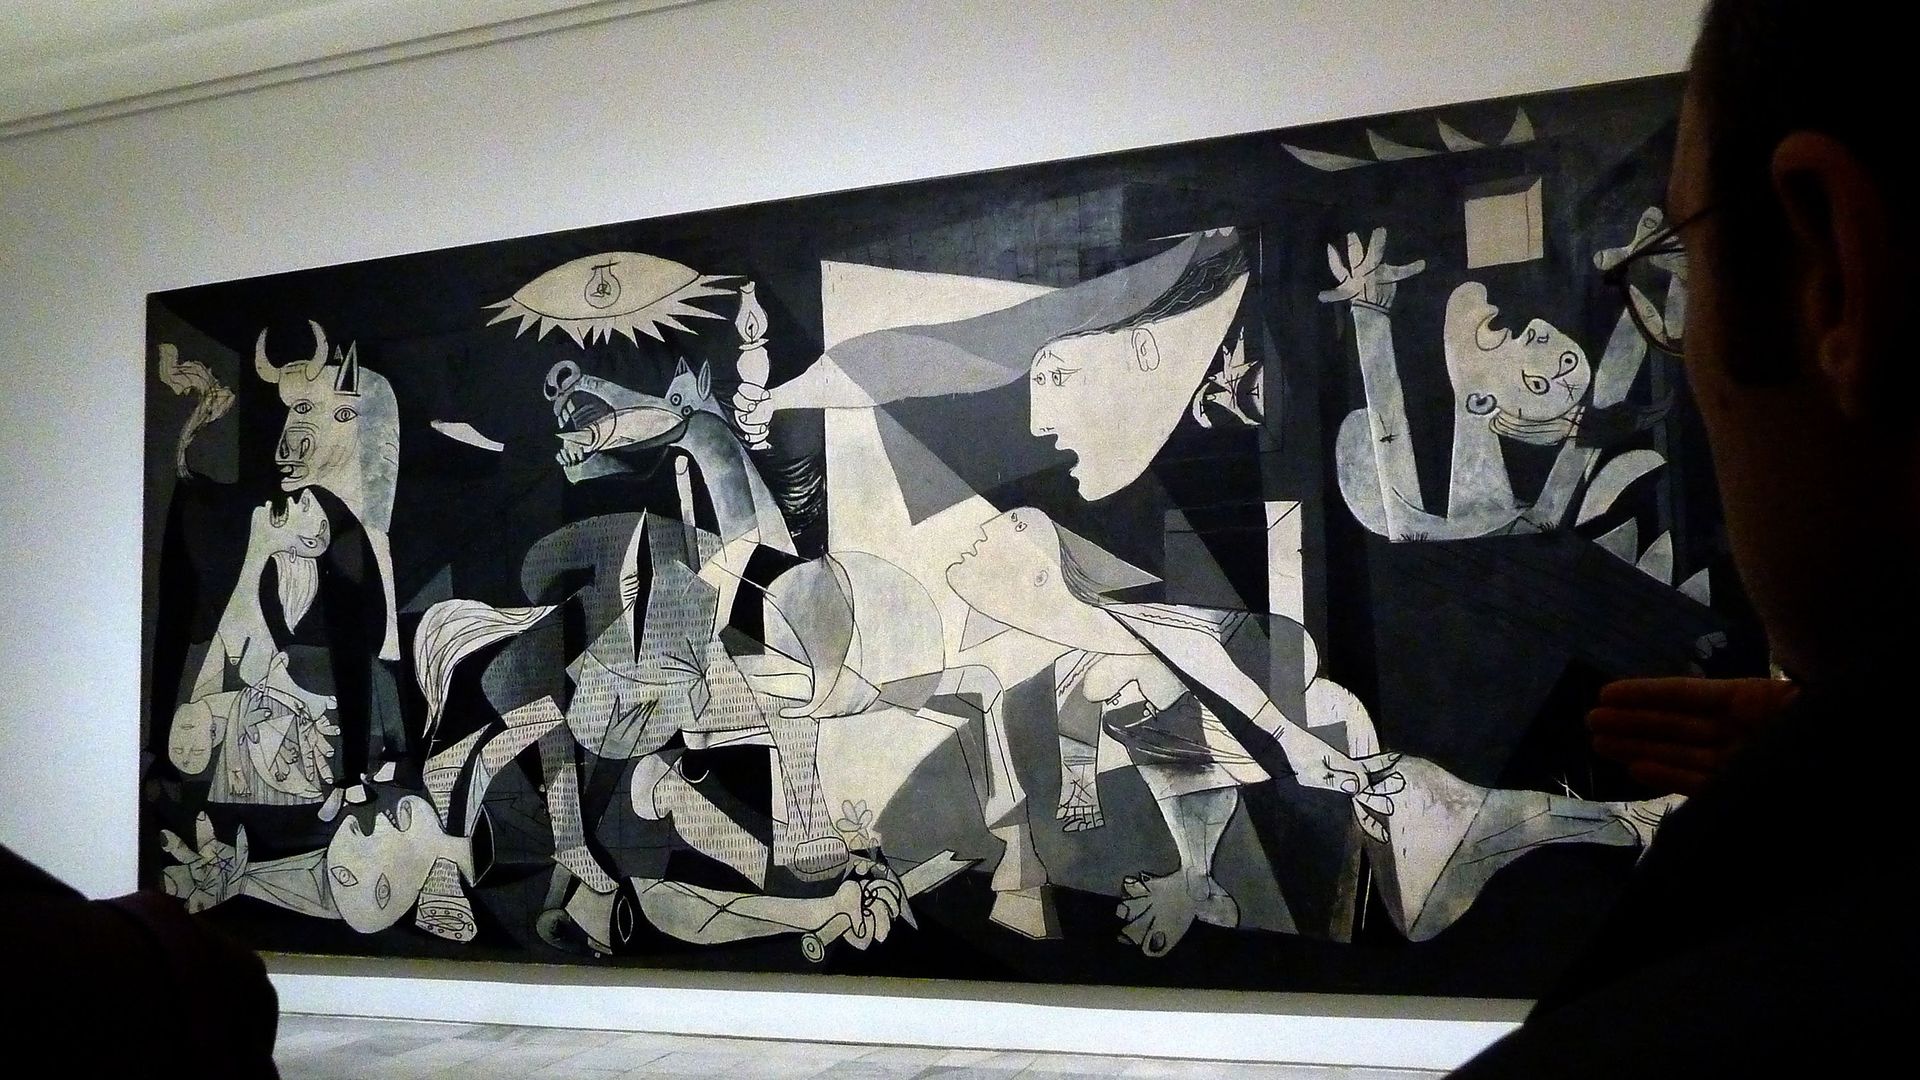 Pablo Picasso, "Guernica"